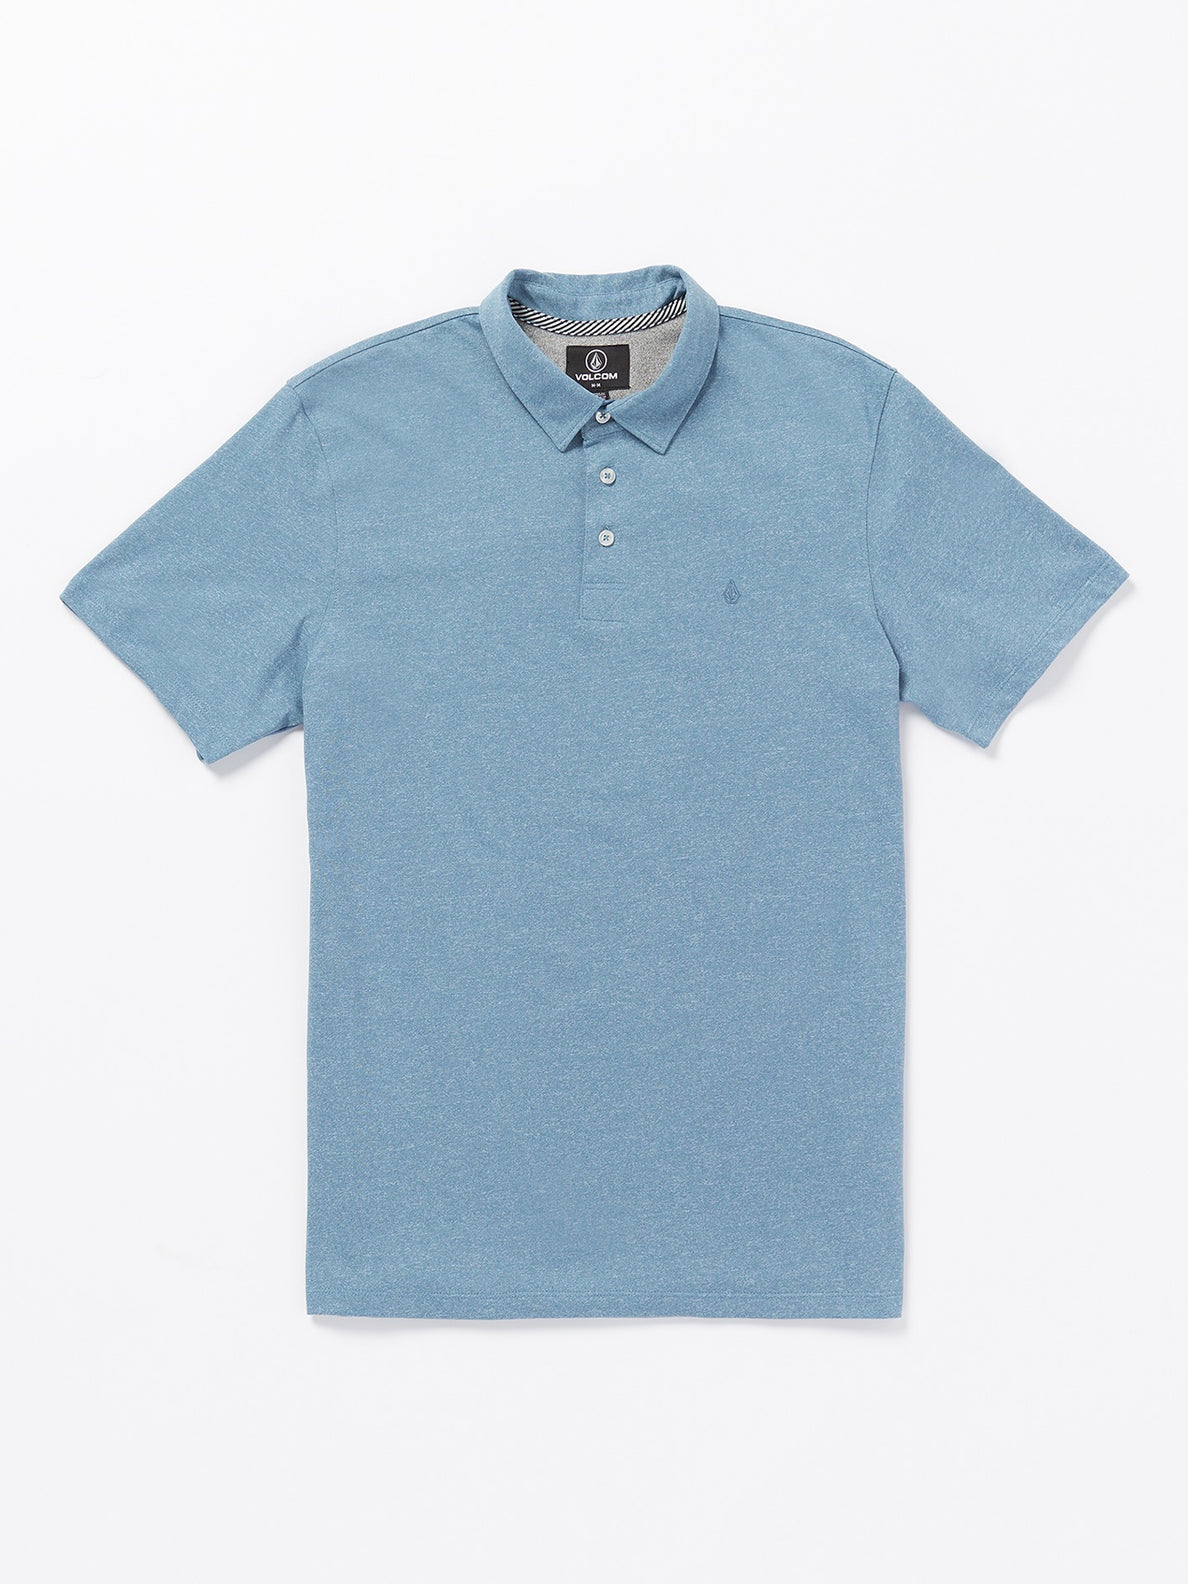 Wowzer Polo Short Sleeve Shirt - Stone Blue